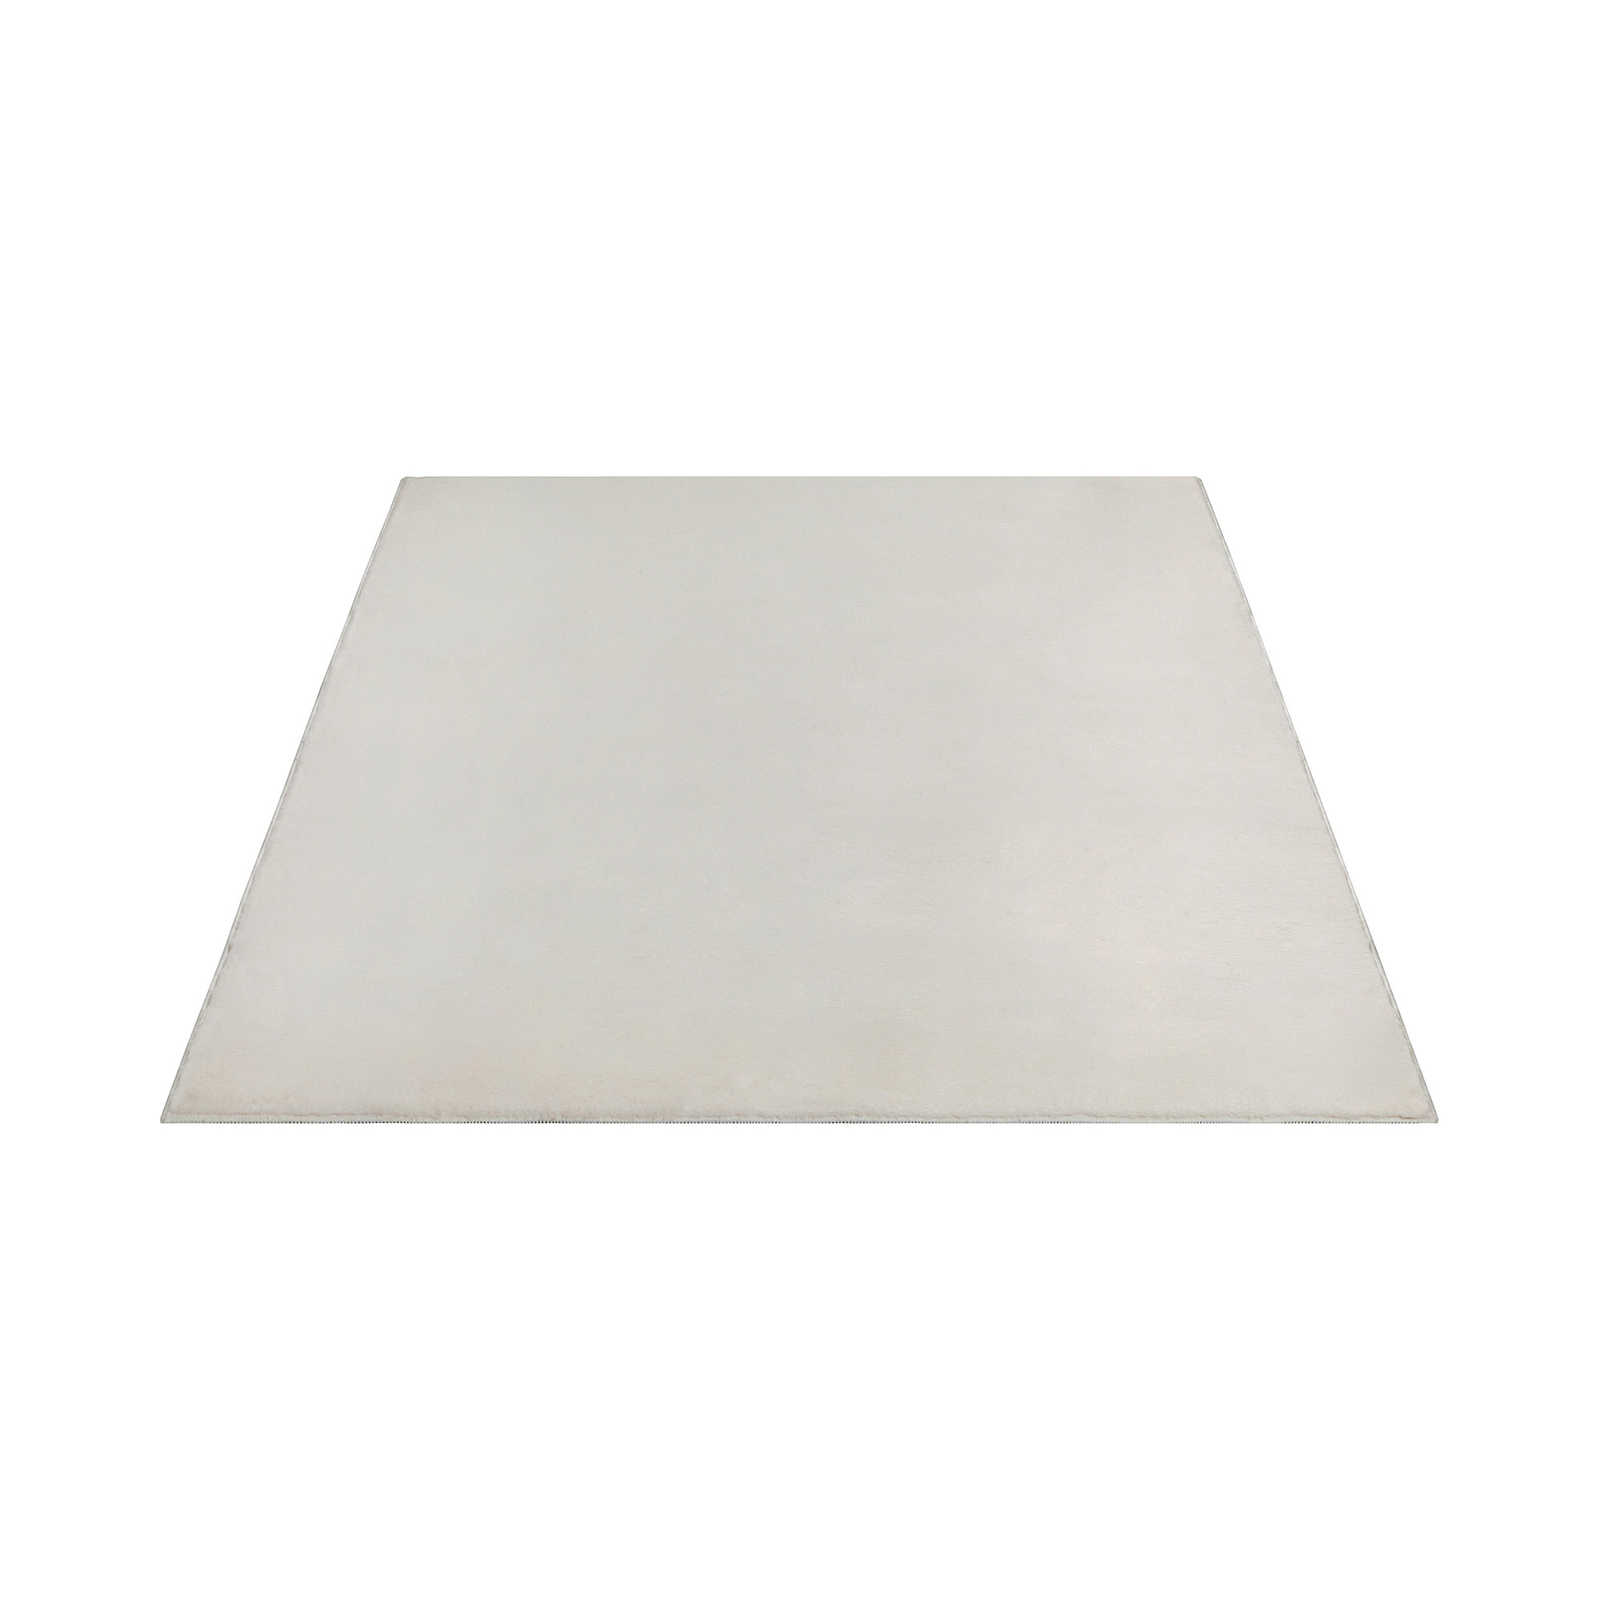 Soft high pile carpet in cream - 280 x 200 cm
